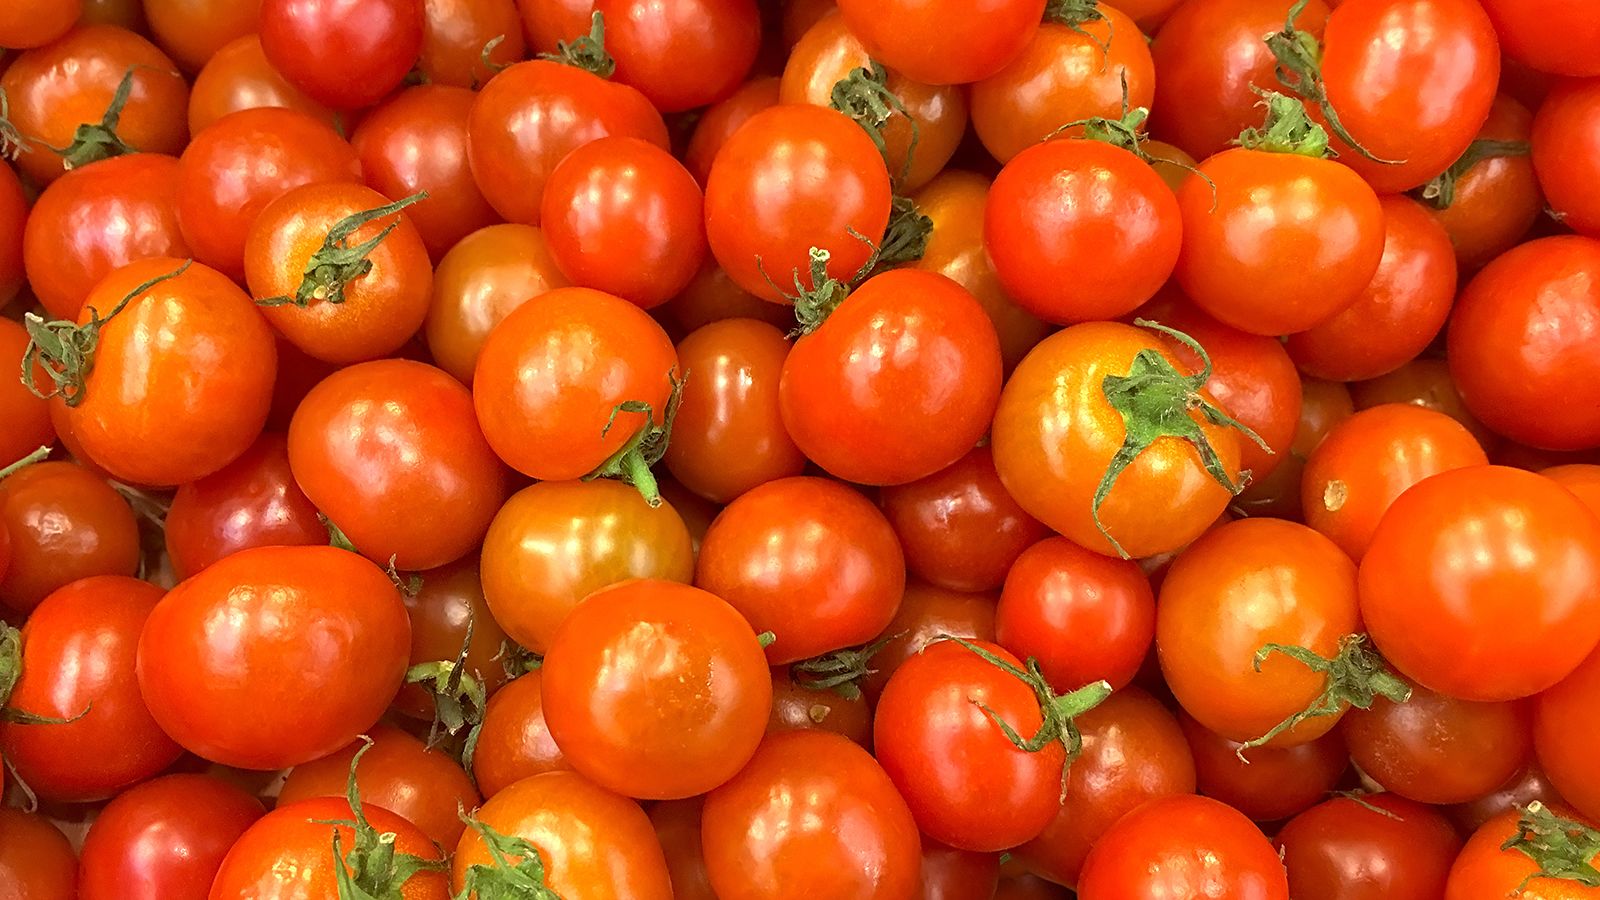 Cherry tomatoes offer a crisp, sweet bite. 